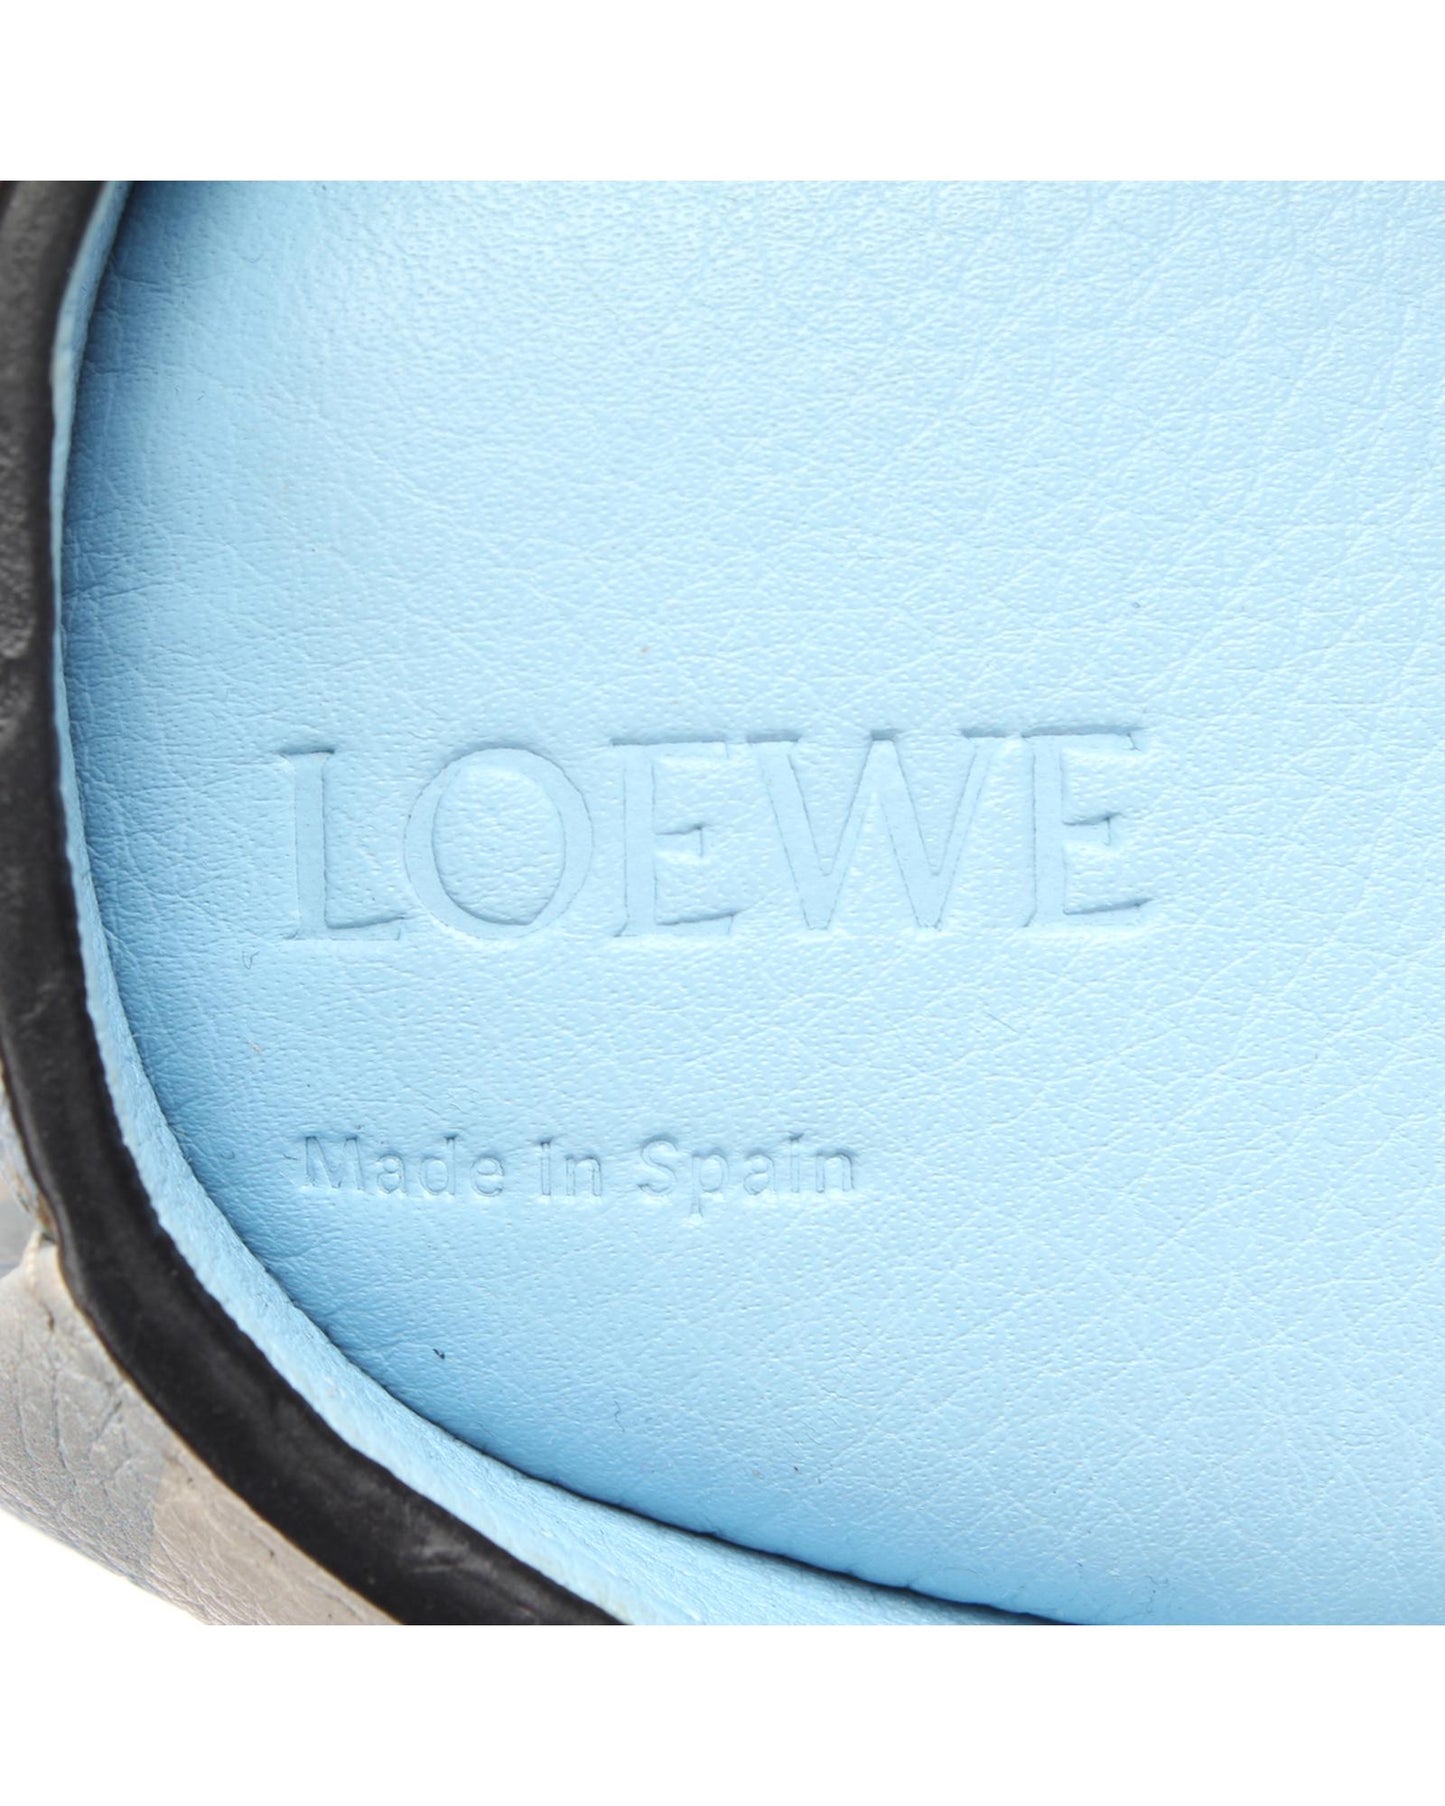 Loewe Women's Blue Leather Elephant Gingham Shoulder Bag in Blue